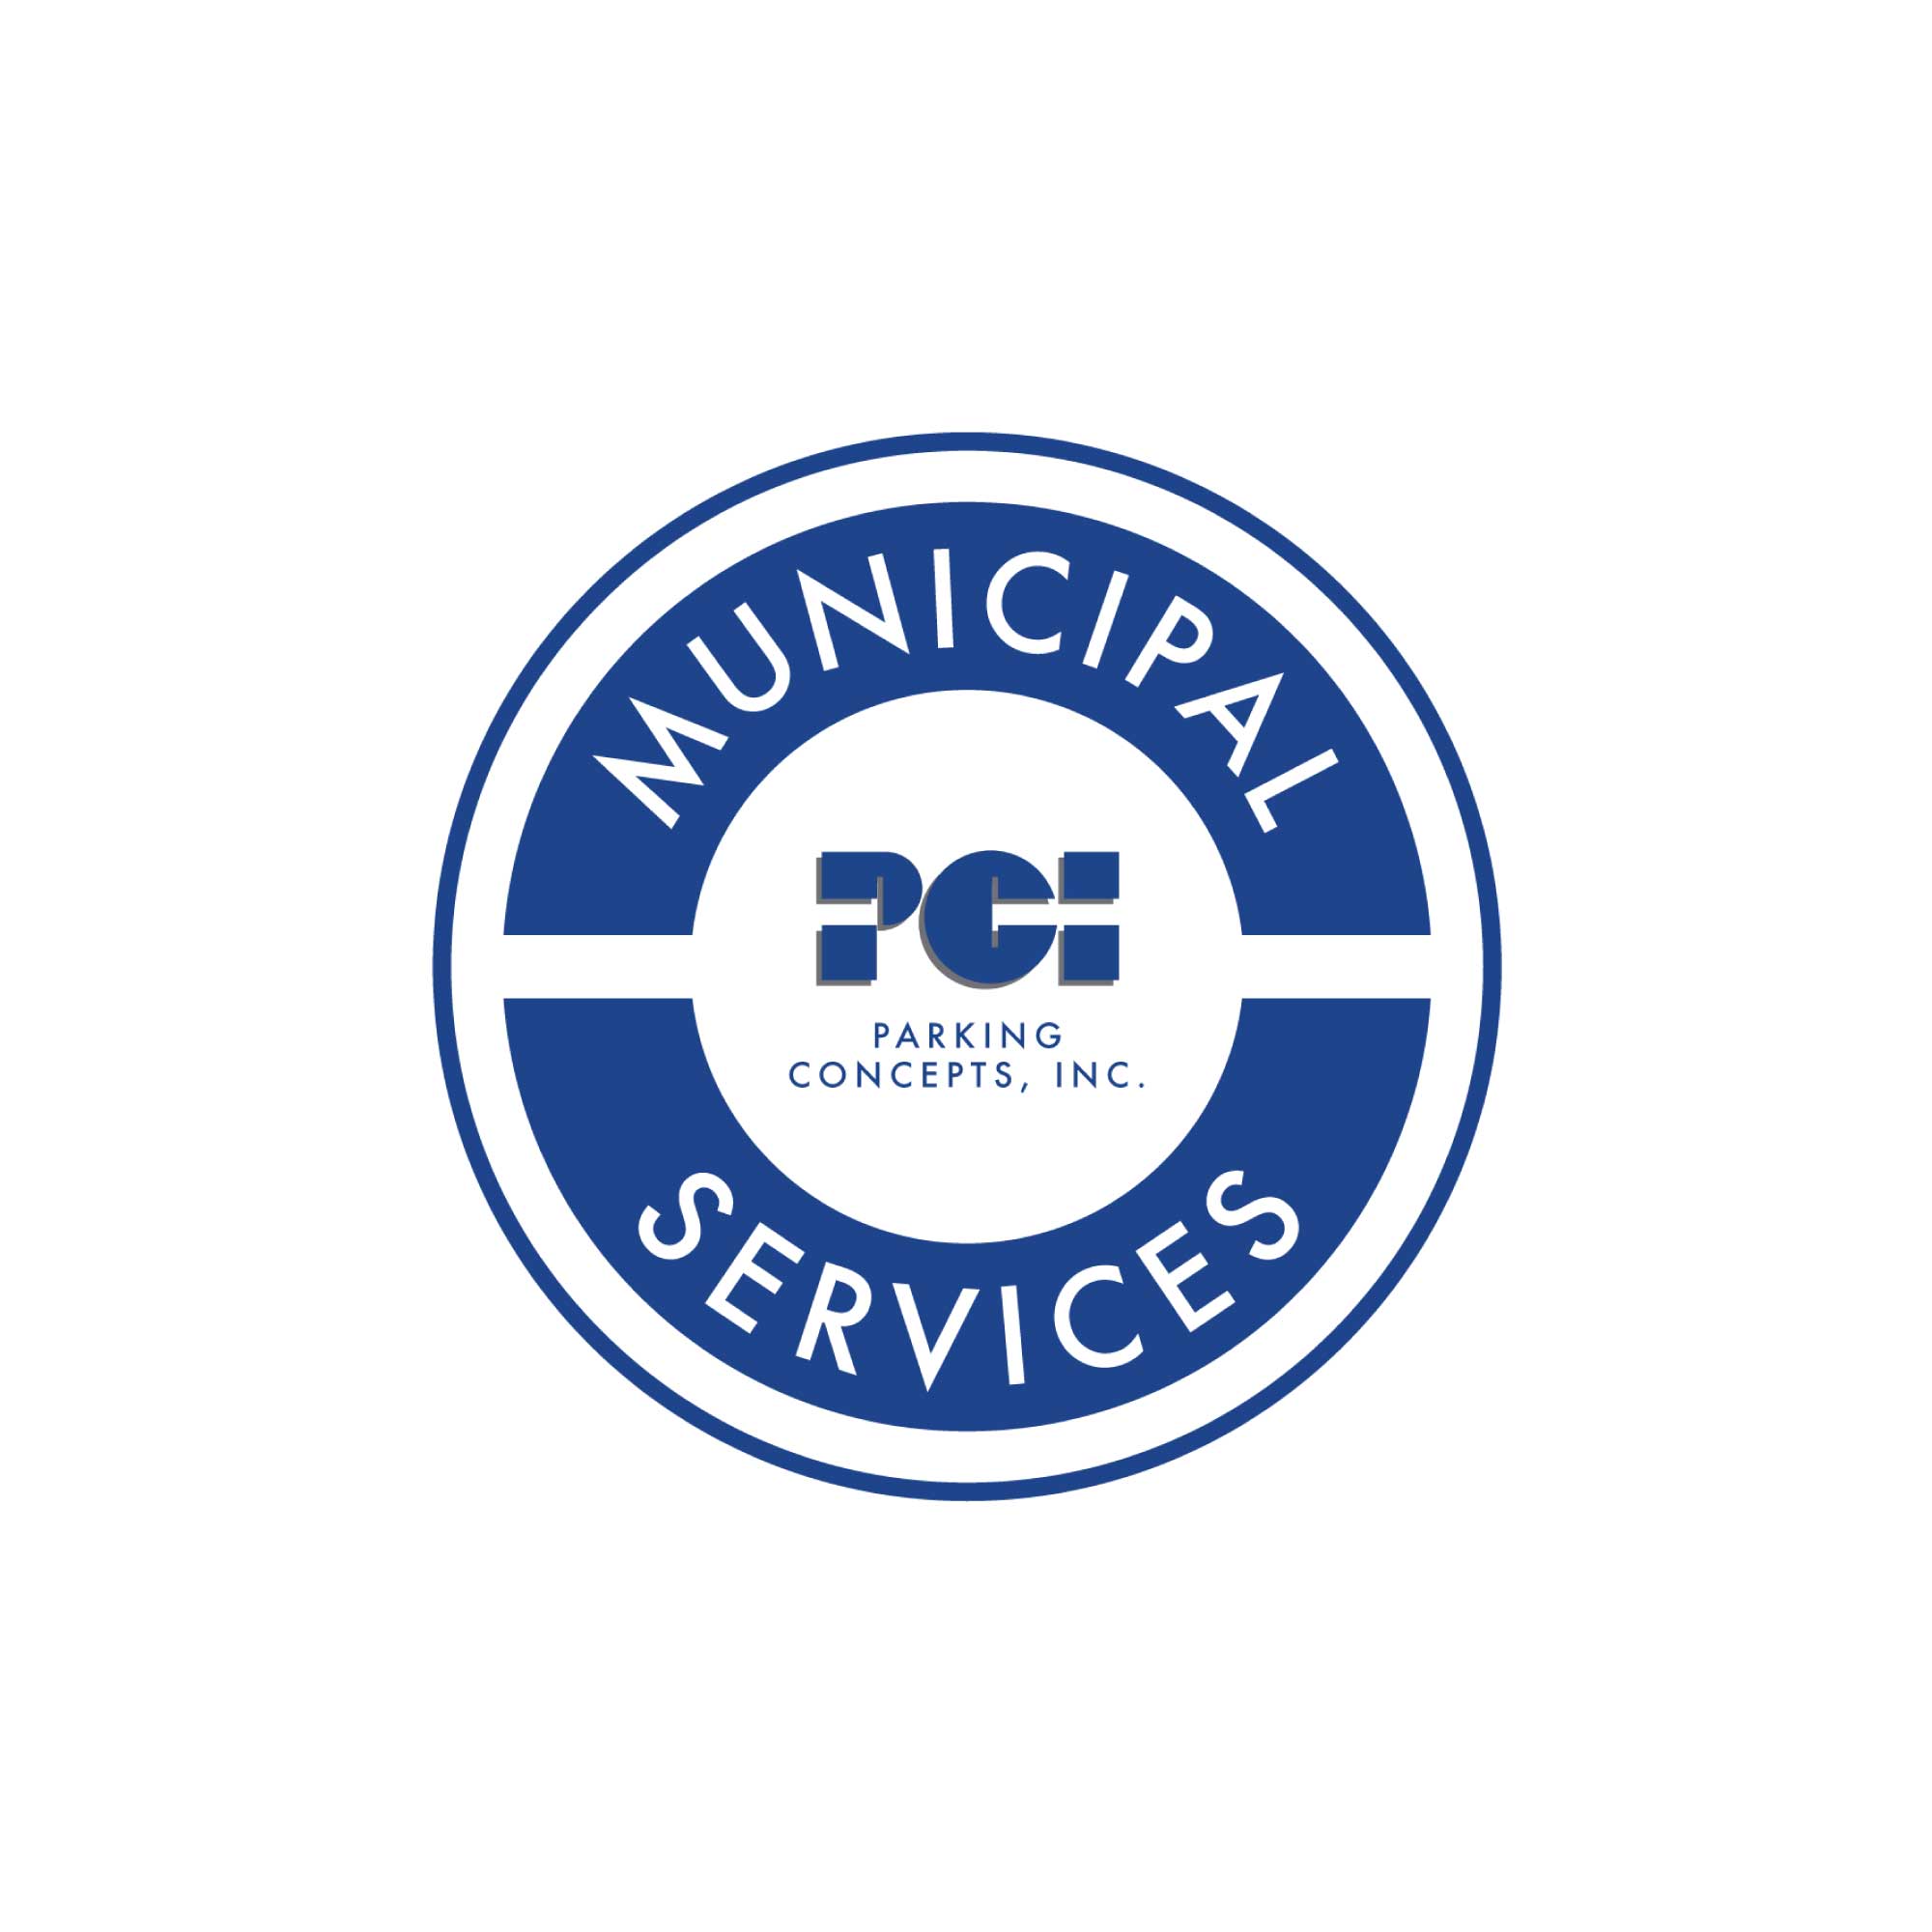 Municipal Parking Services Company